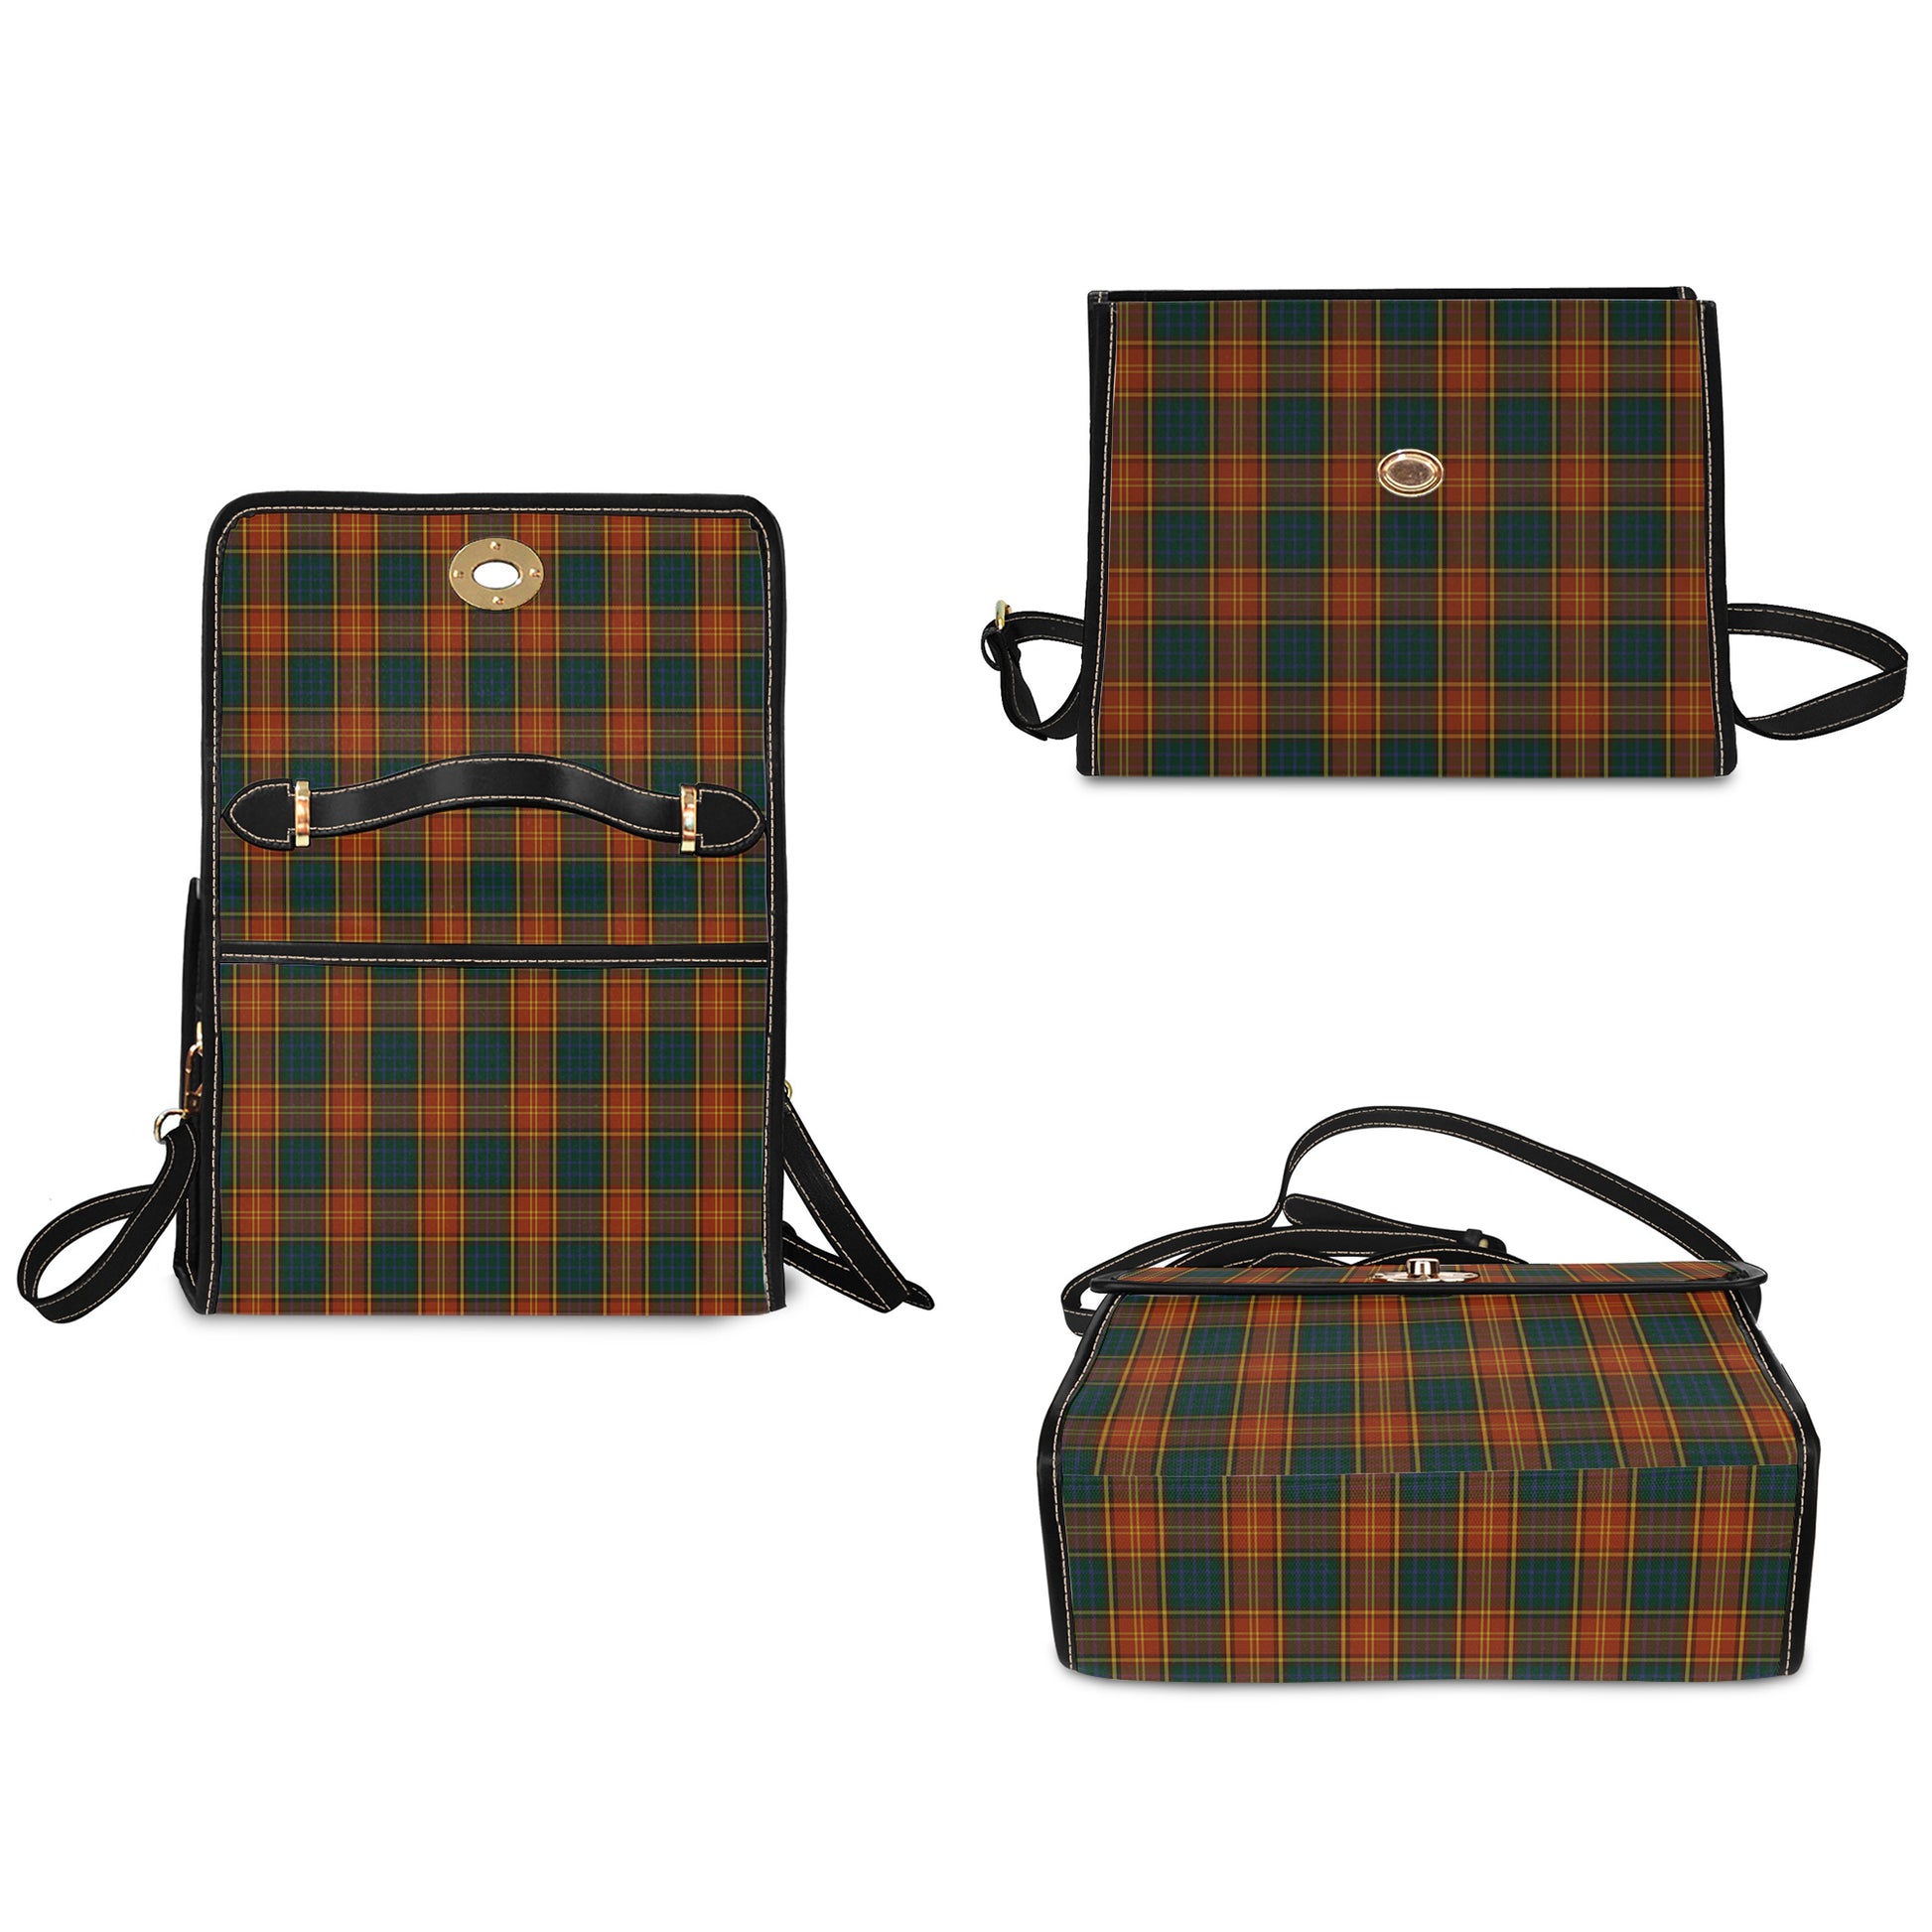 roscommon-tartan-leather-strap-waterproof-canvas-bag